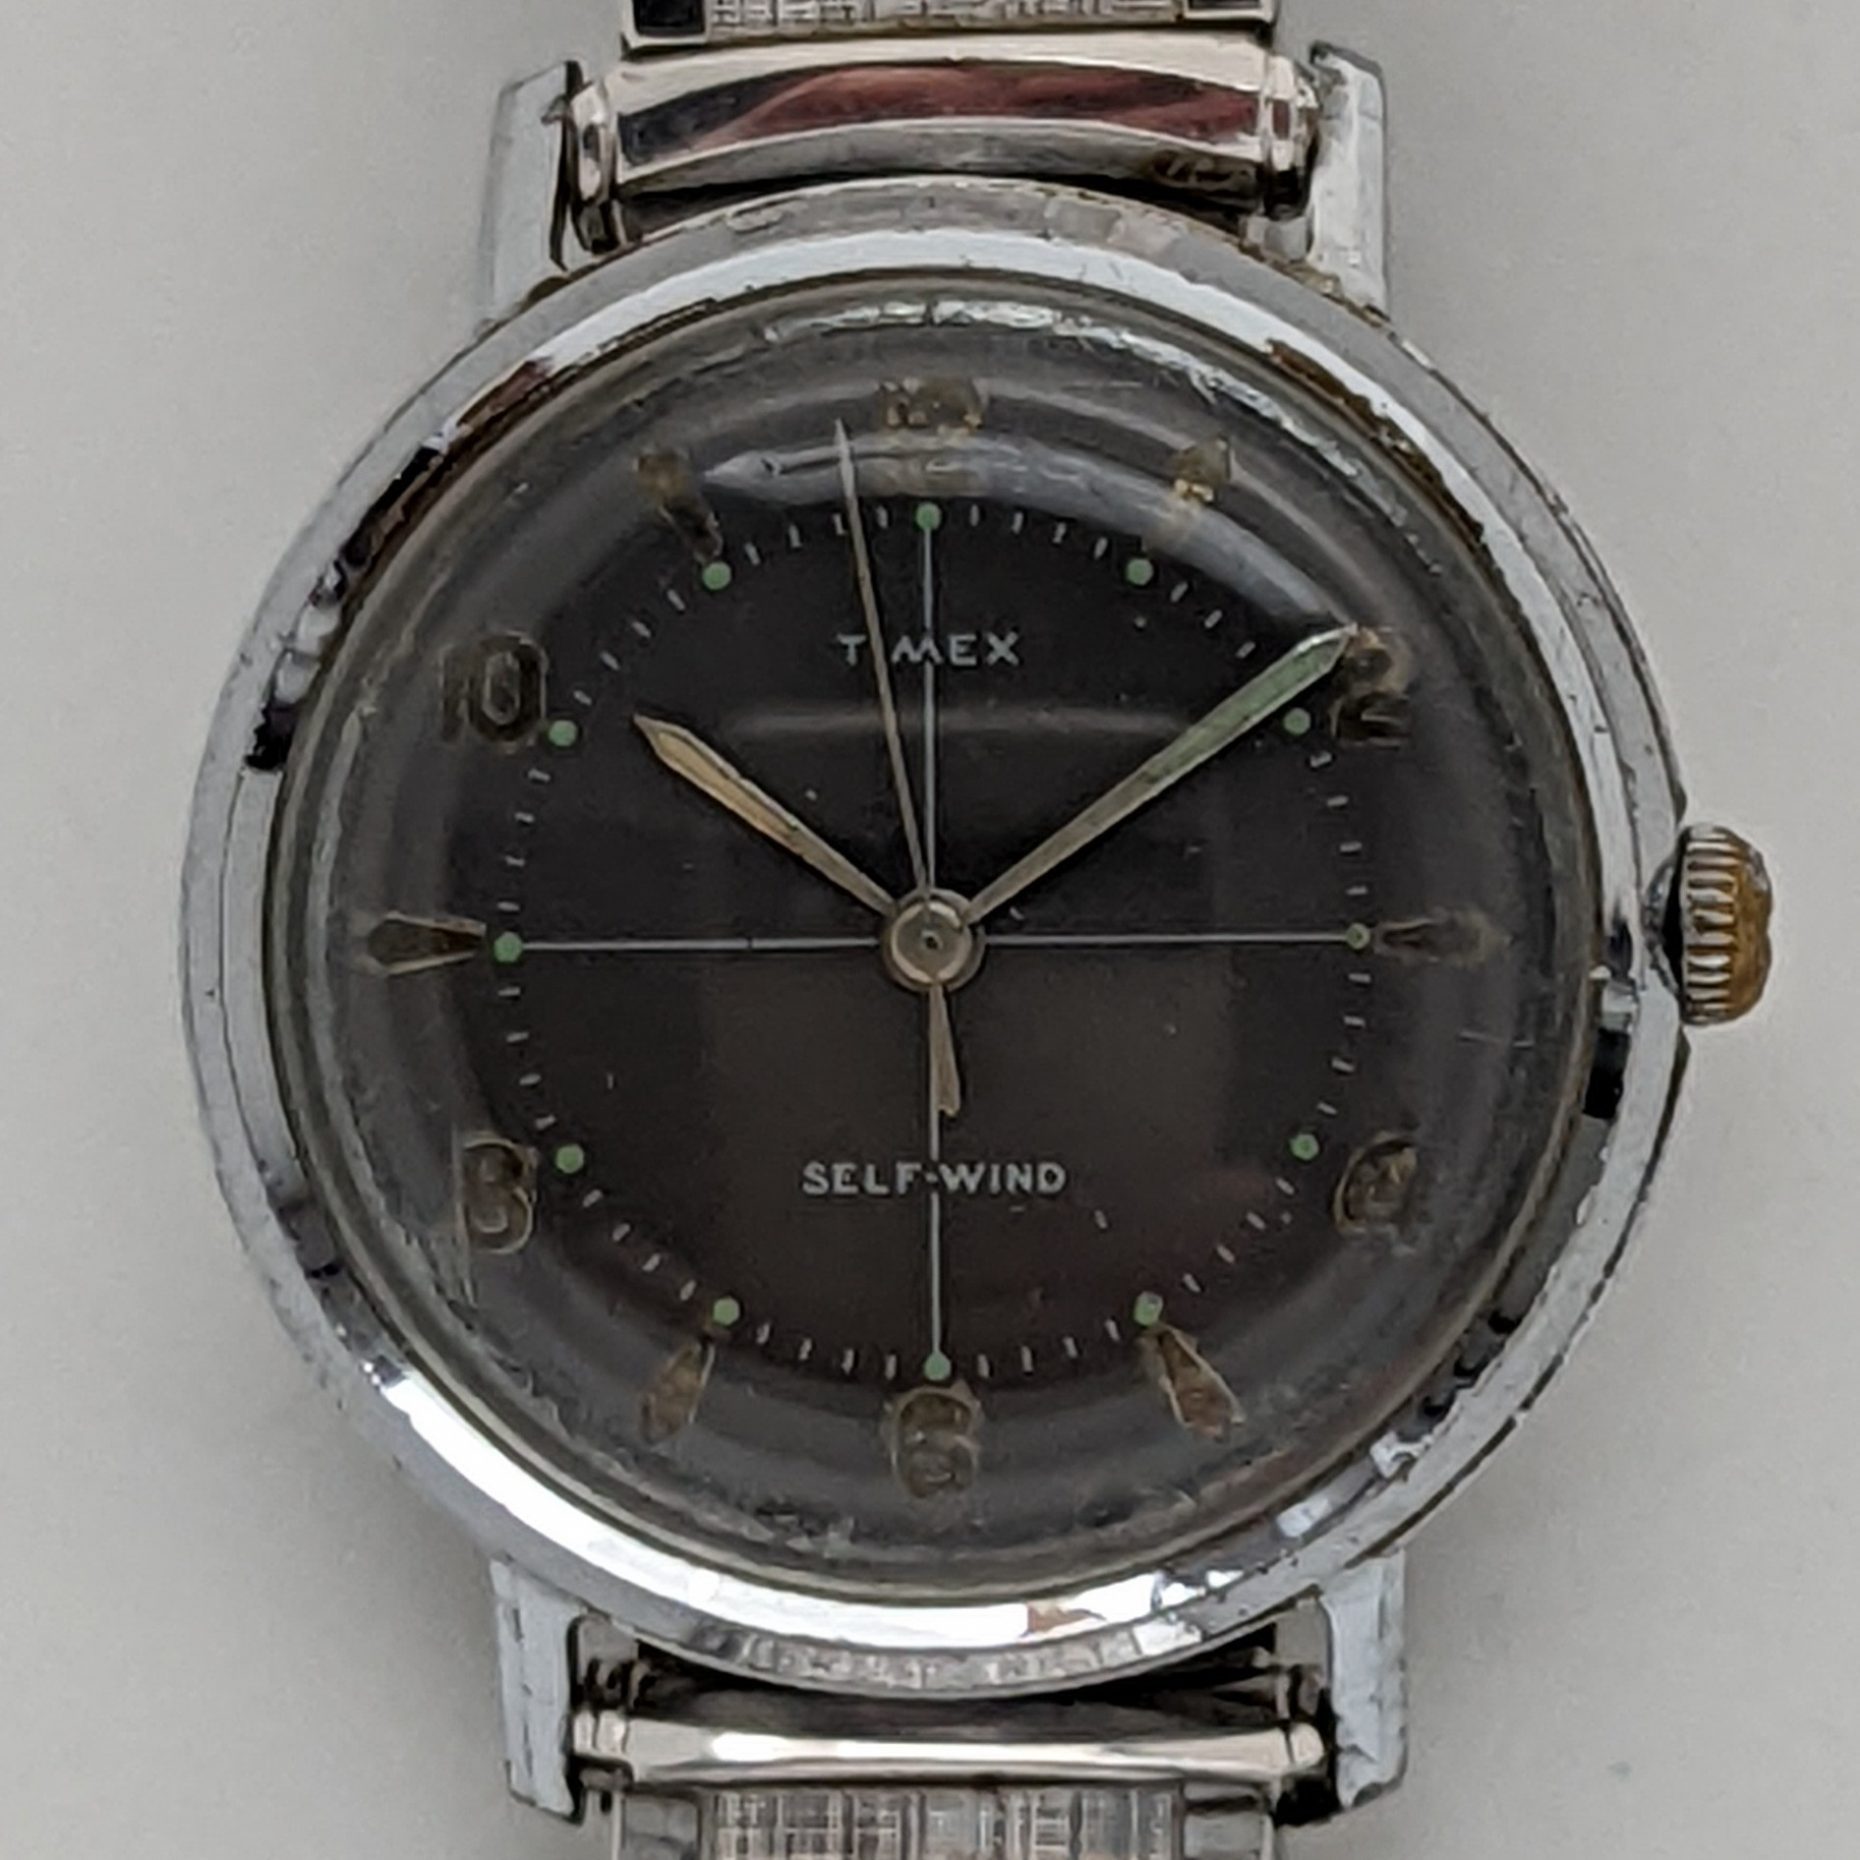 Timex Viscount 4017 2962 [1962]